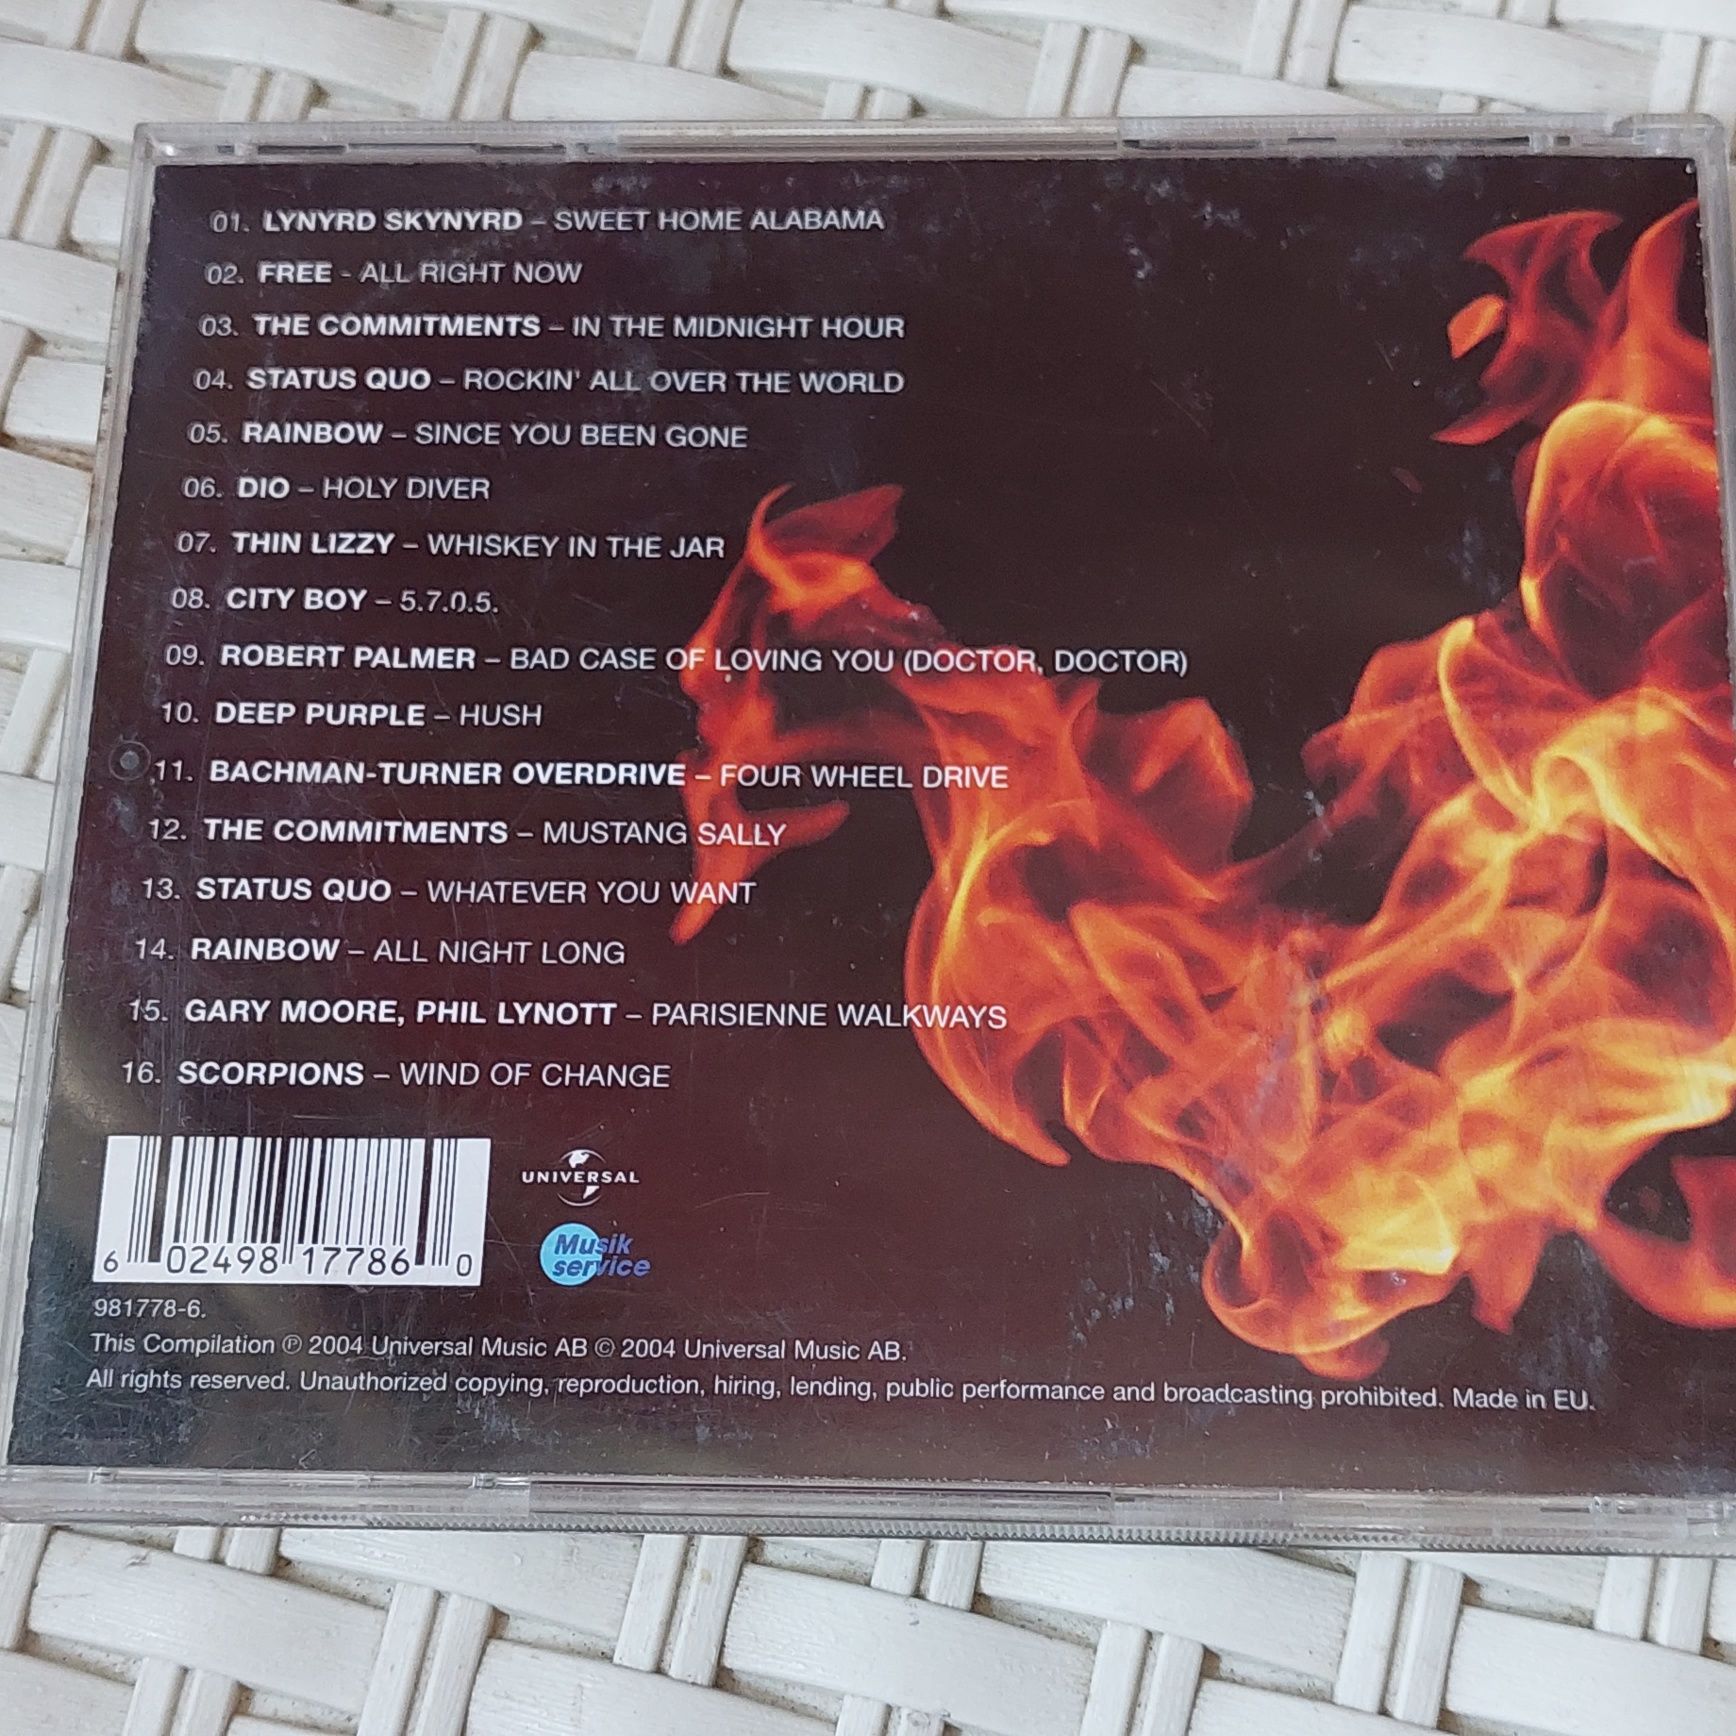 Płyta CD  Rockklassiker